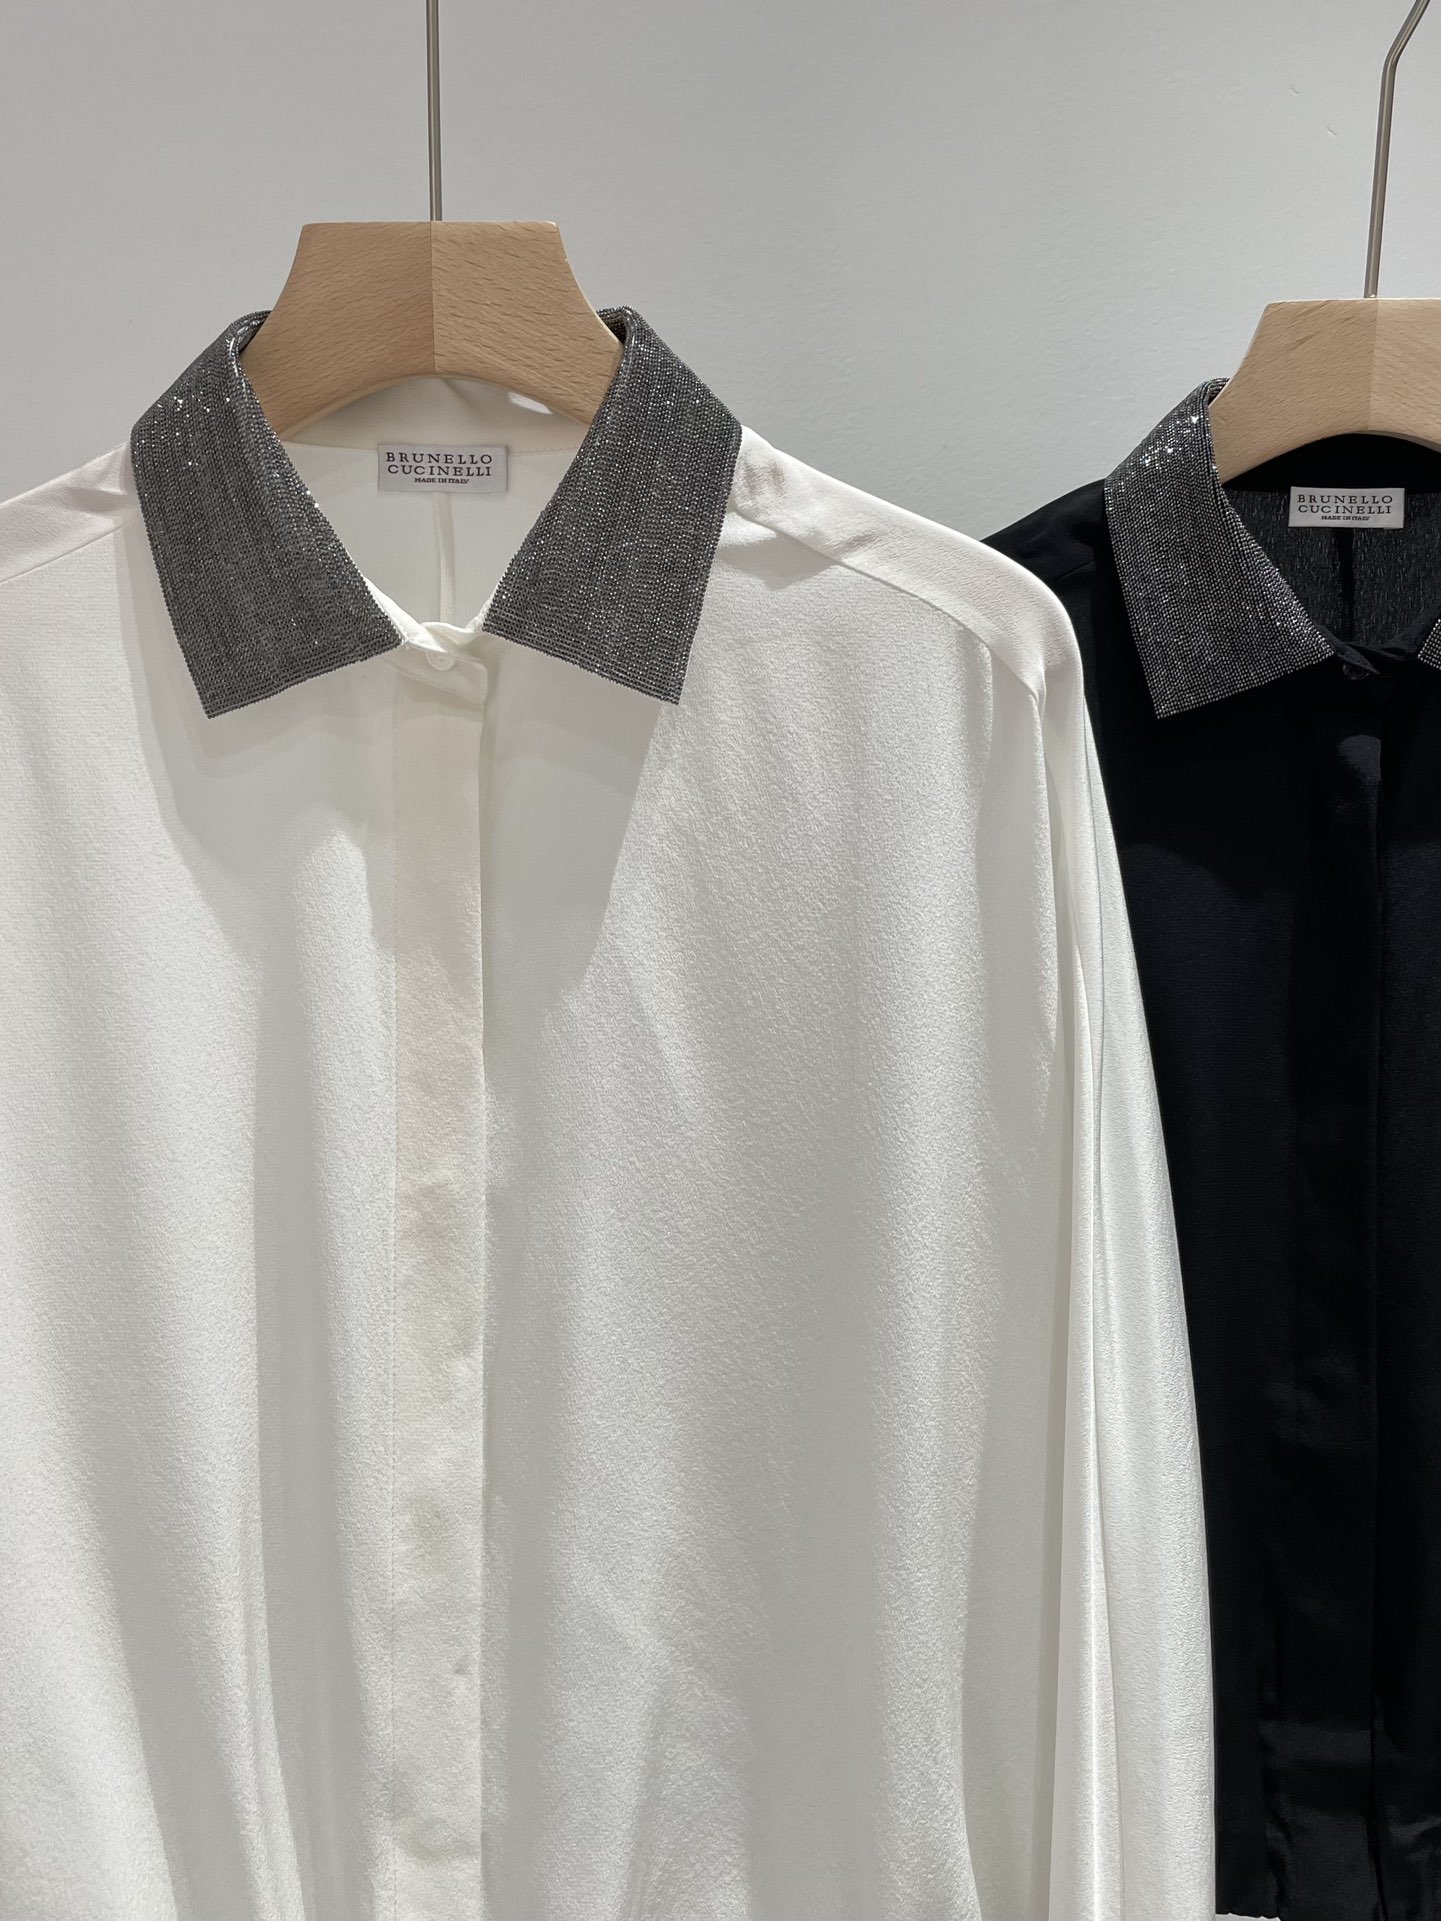 BC重工钉珠衬衫100%真丝超精致百搭款黑色白色SML具体价格咨询客服